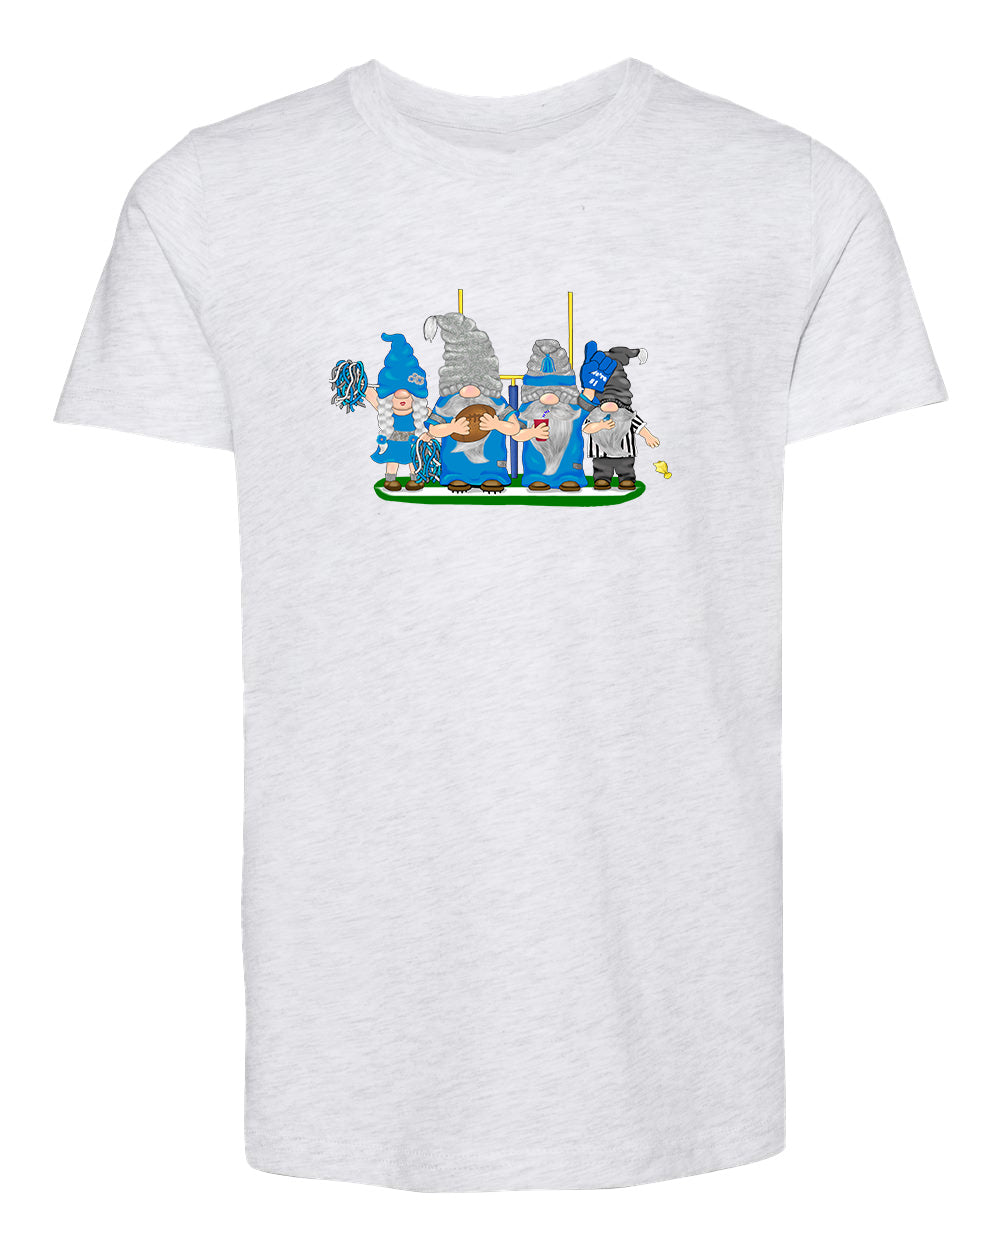 Blue & Silver Football Gnomes  (similar to Detroit) on Kids T-shirt